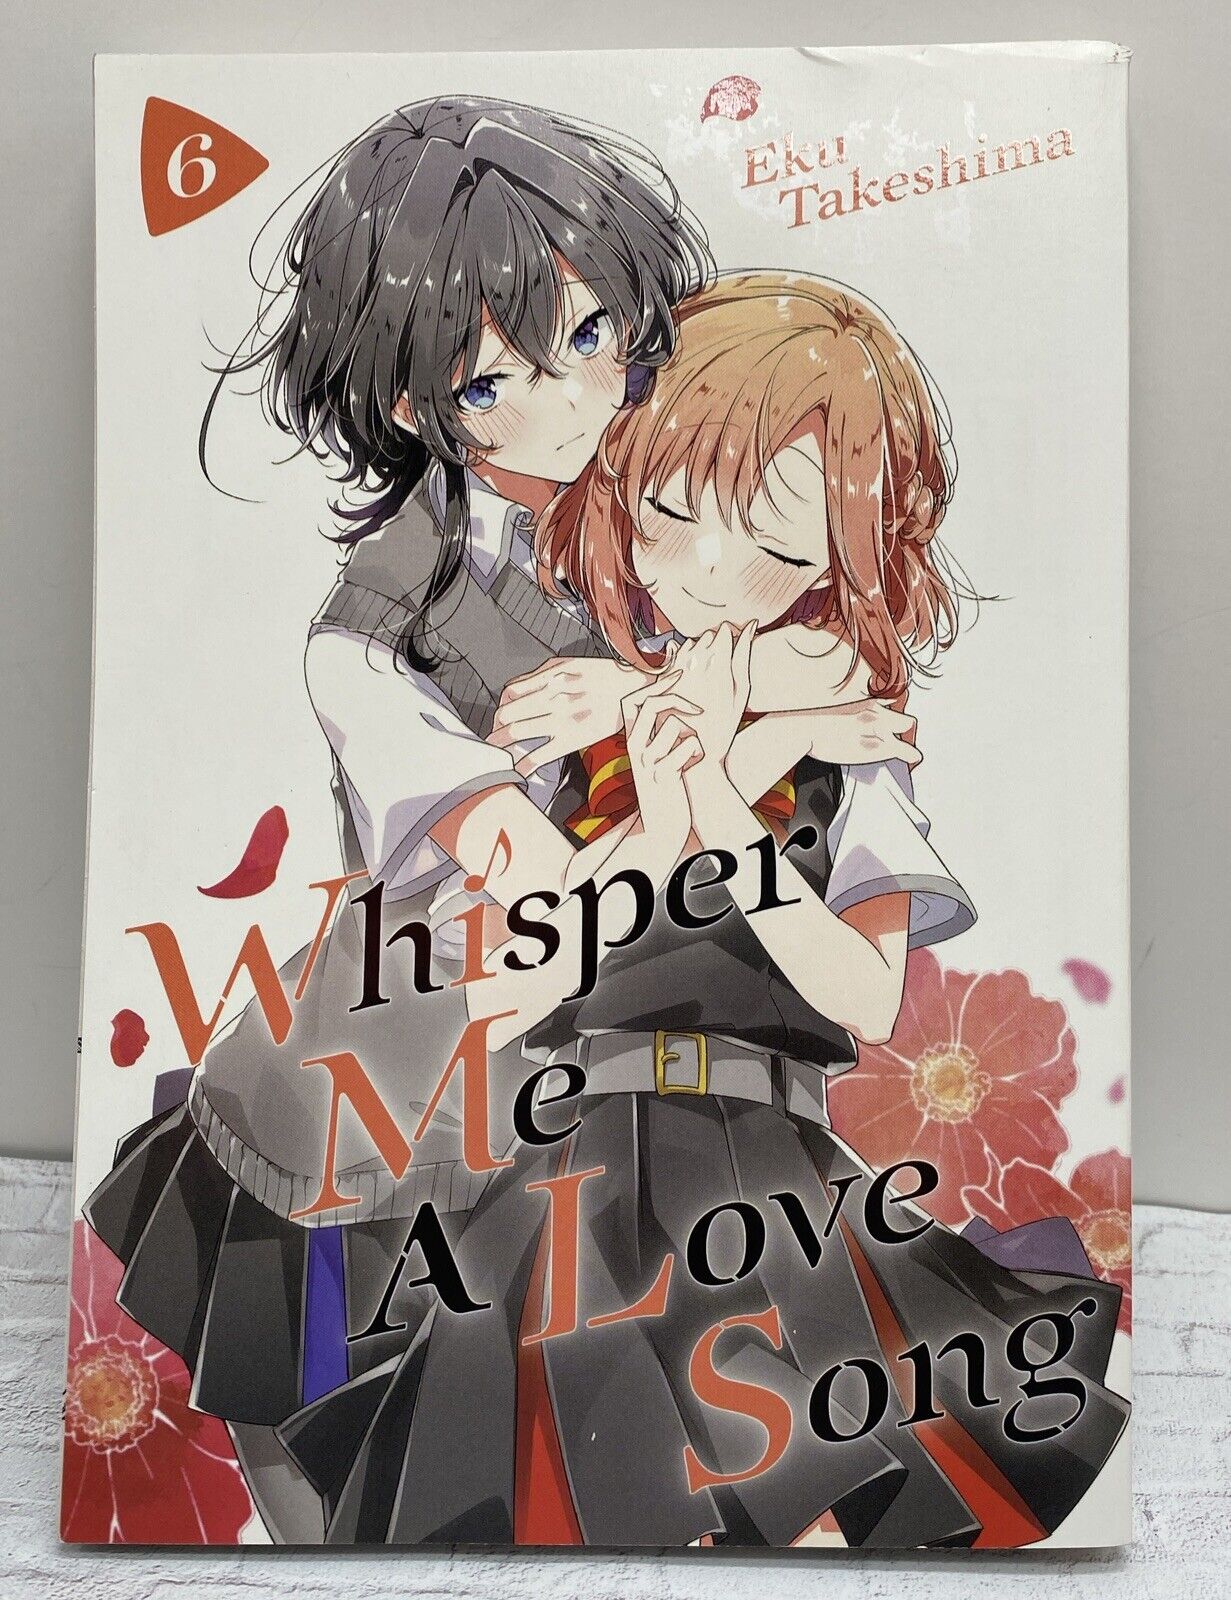 Eku Takeshima Whisper Me a Love Song 6 (Paperback) Whisper Me a Love Song~New